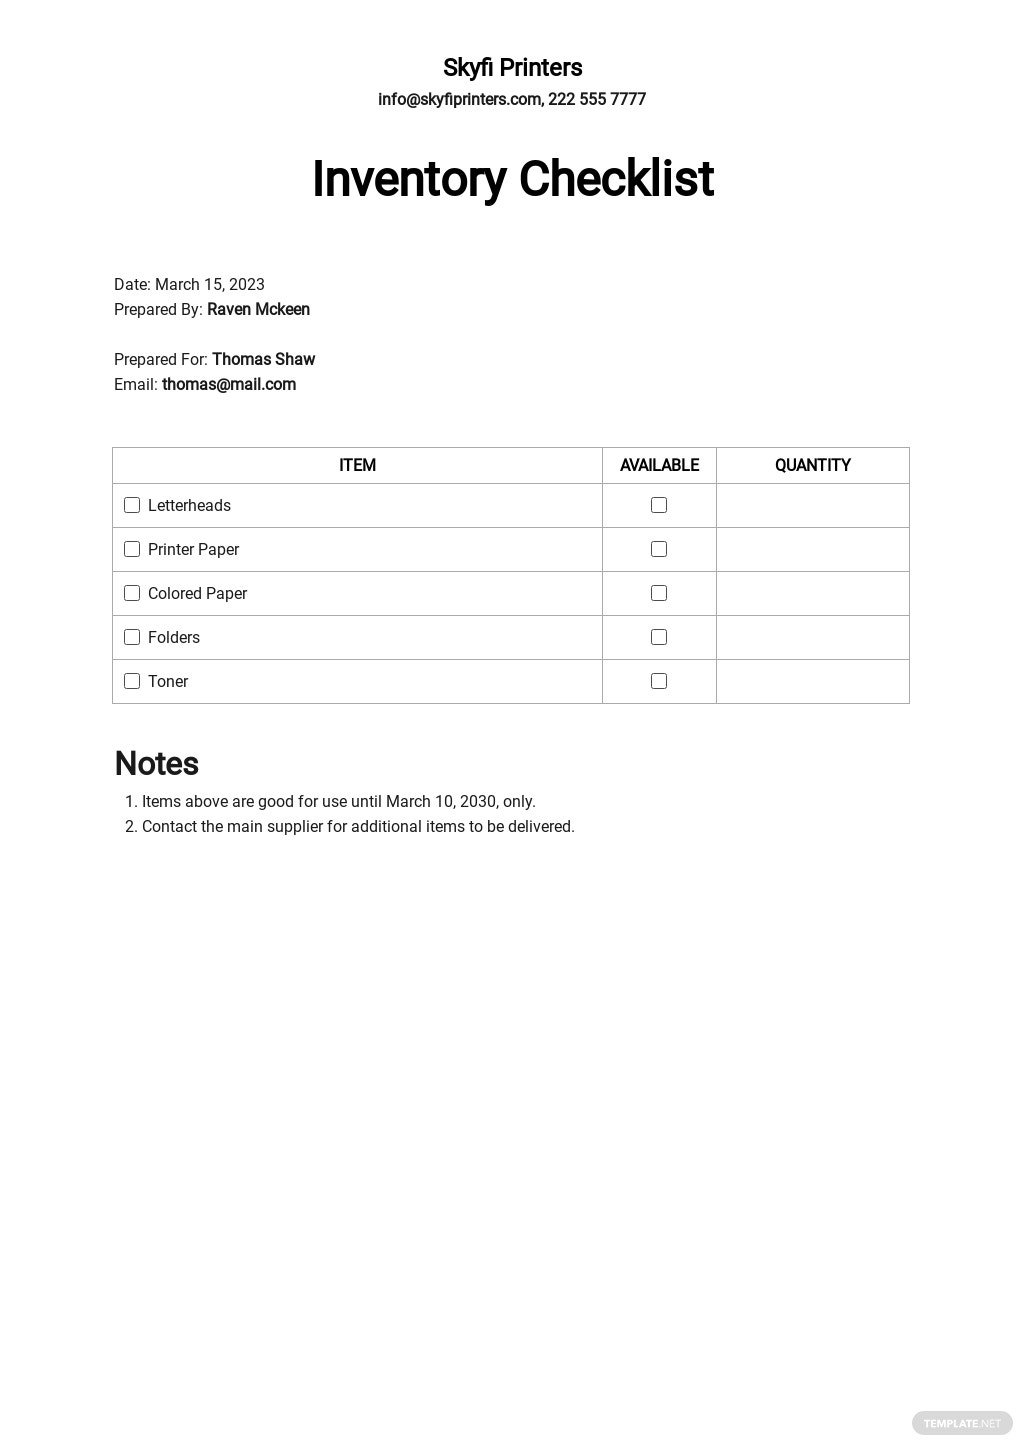 inventory-checklist-template